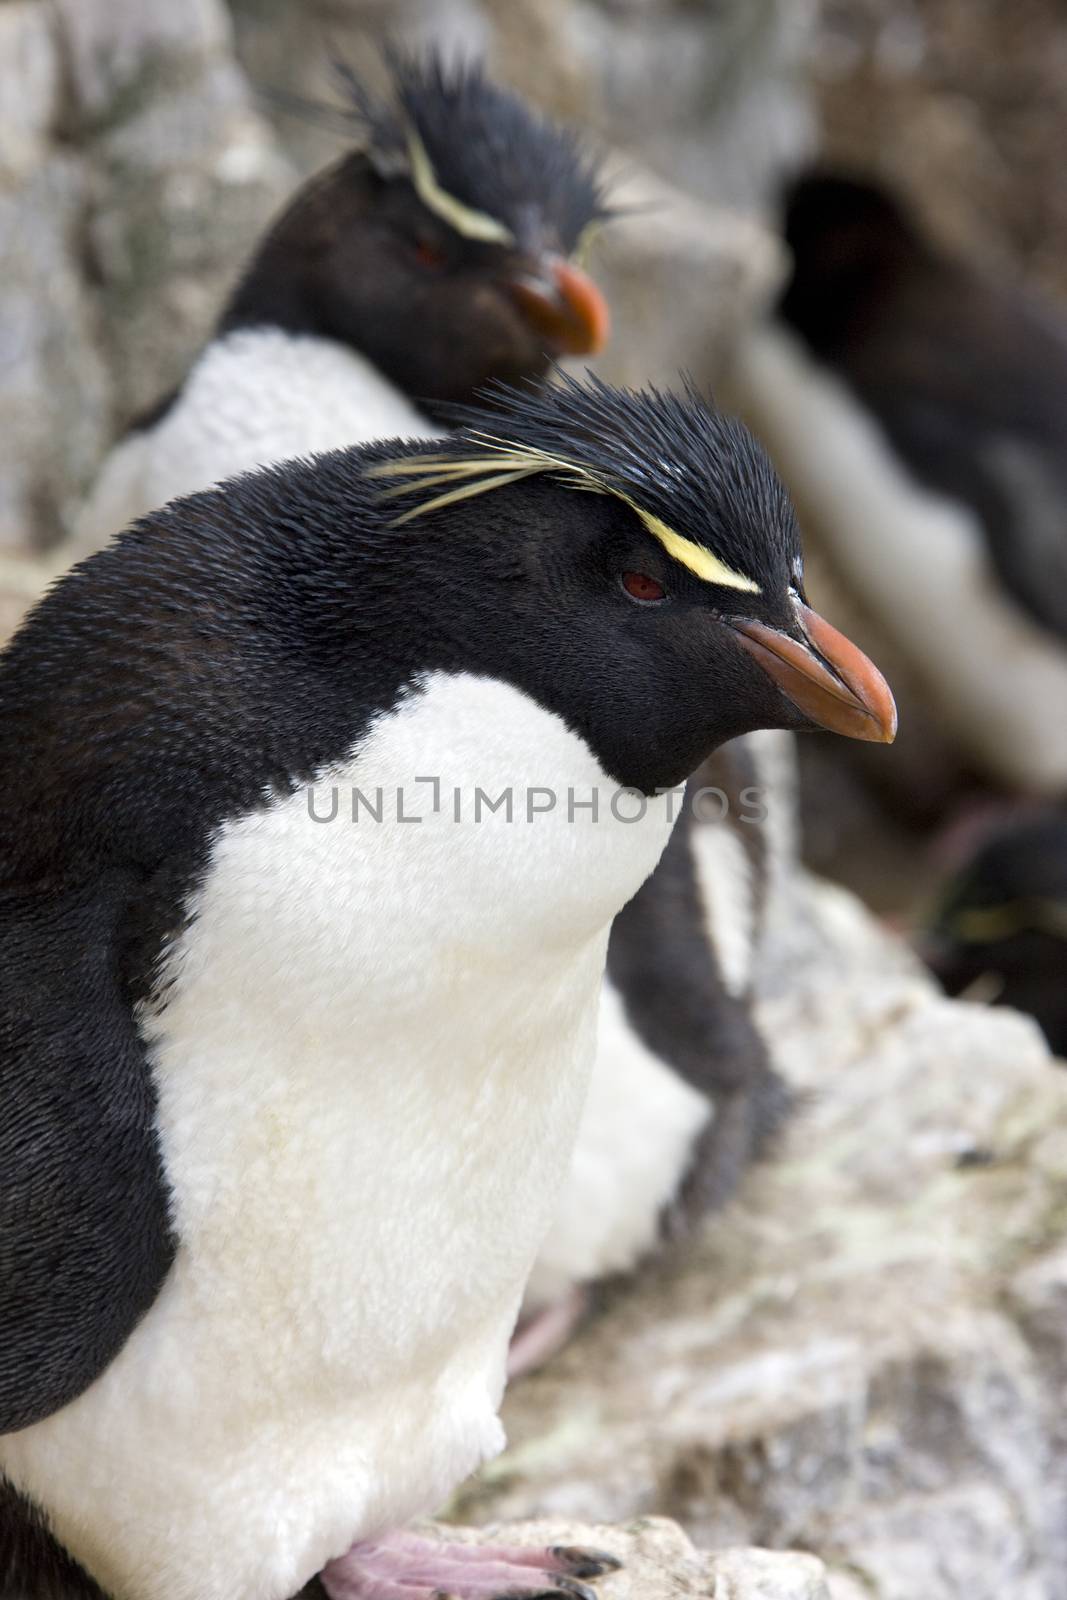 Rockhopper Penguin (Eudyptes Chrysocome) on Pebble Island in West Falkland in The Falkland Islands